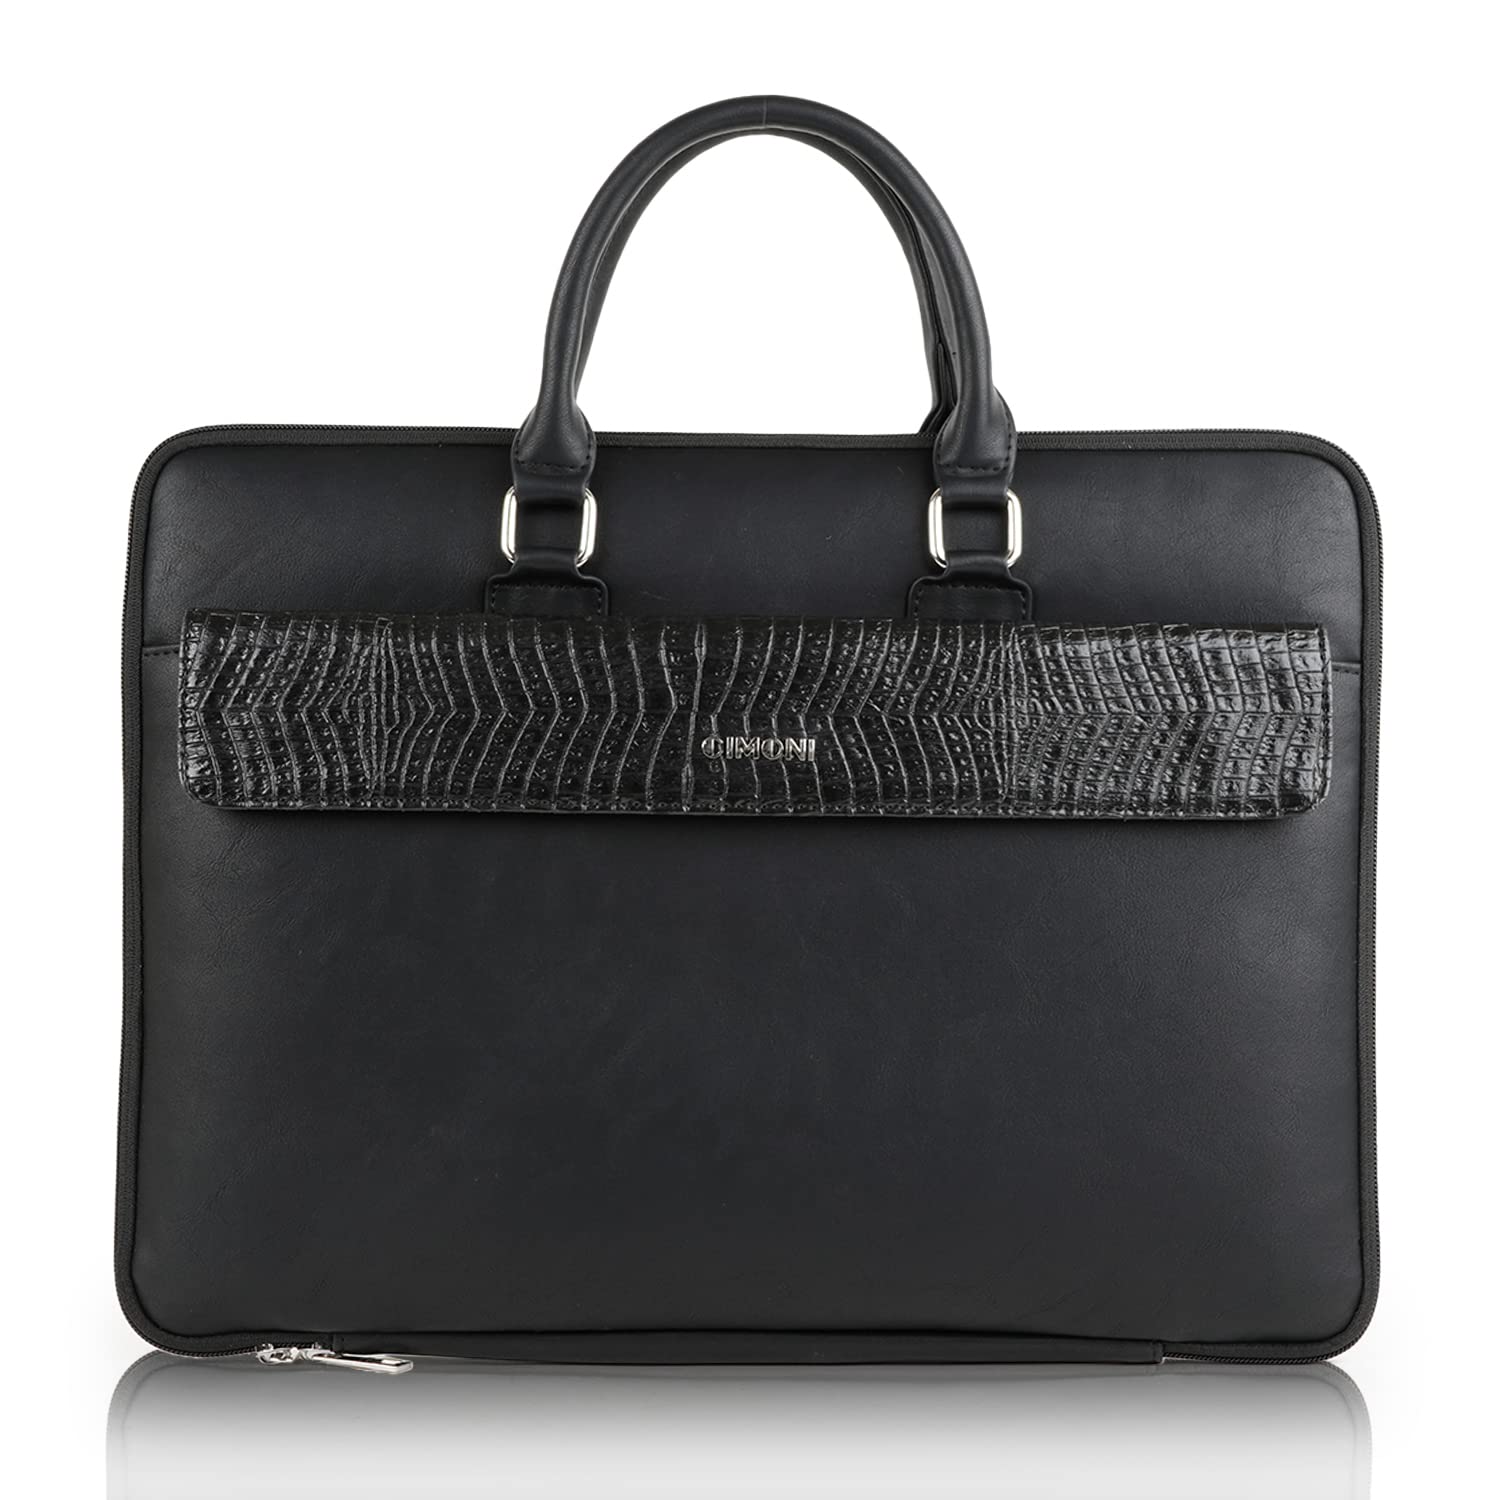 CIMONI® Synthetic Vegan Leather Bag Classic Top Handle Laptop Bag Handheld 15.6 Inch Water Resistant Briefcase Messenger Bag Carrying Handbag (Color - Black)